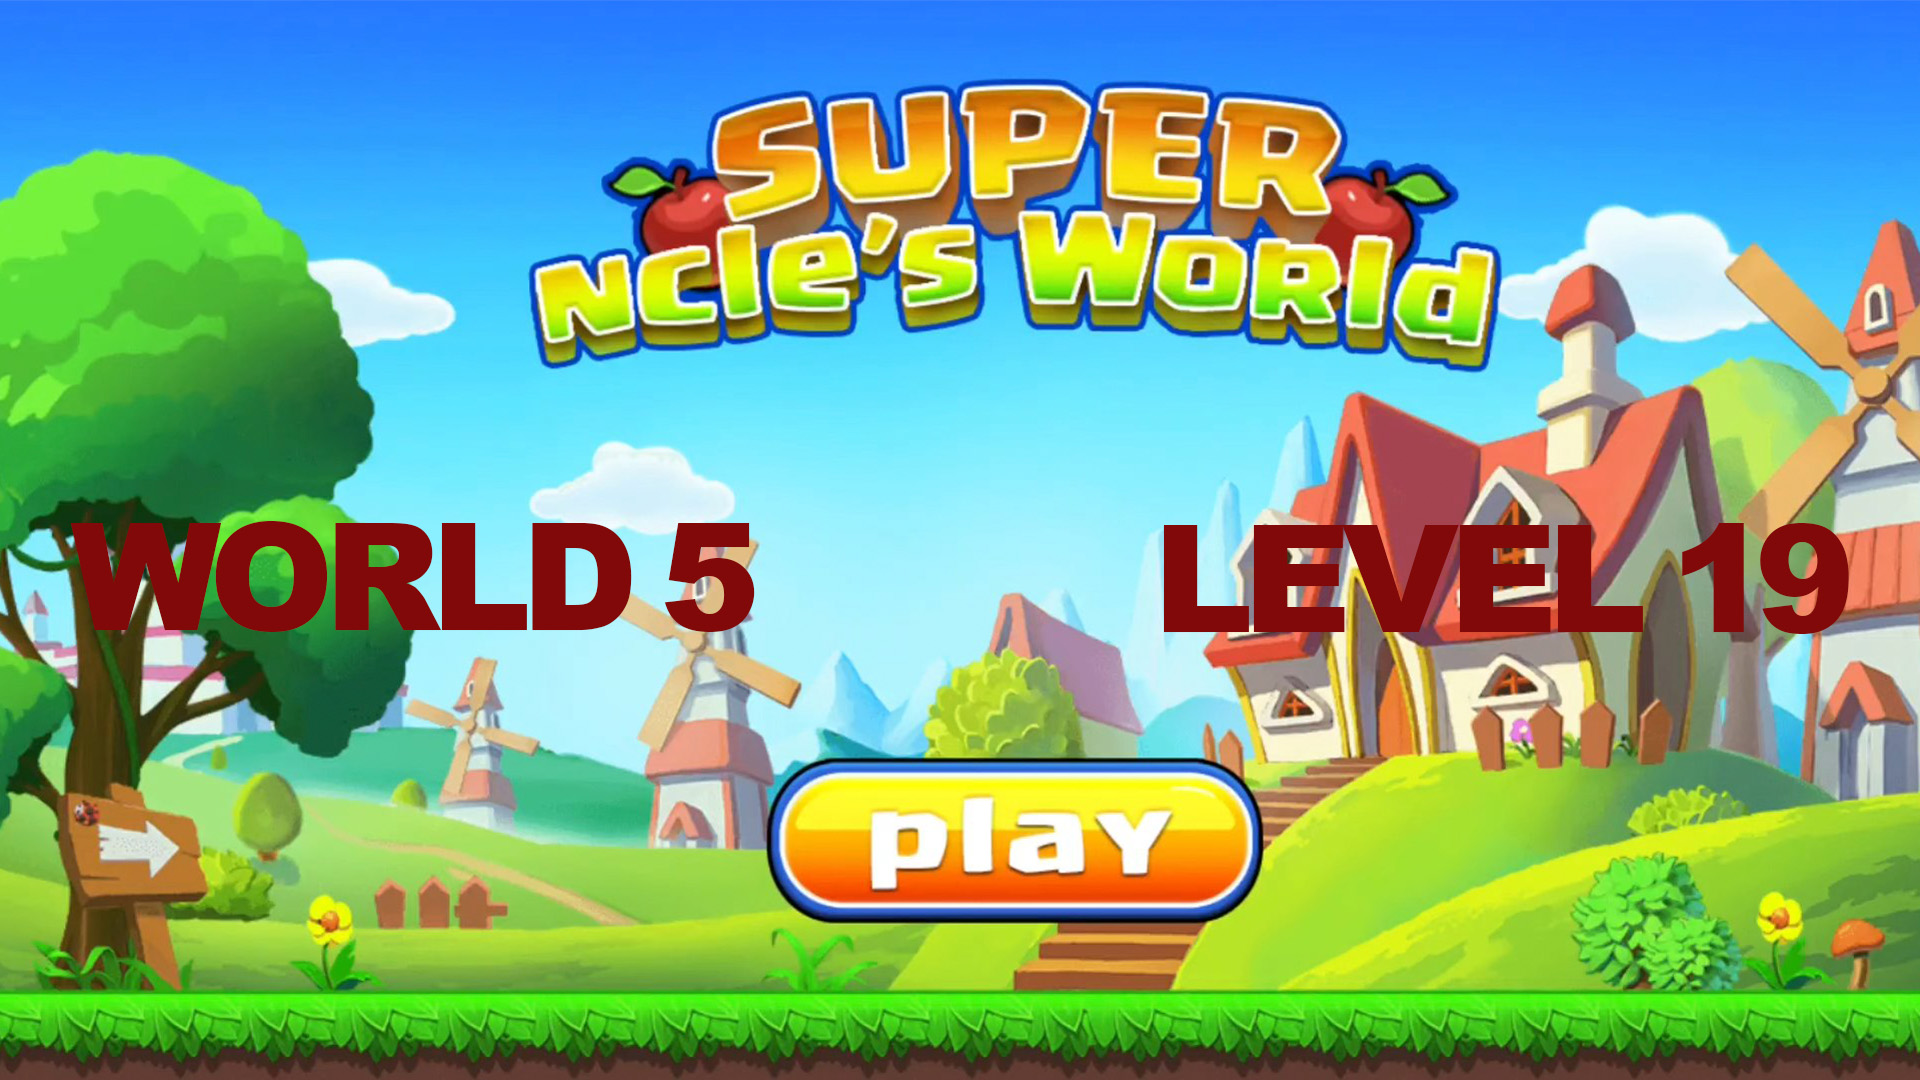 Super ncle's  World 5. Level 19.